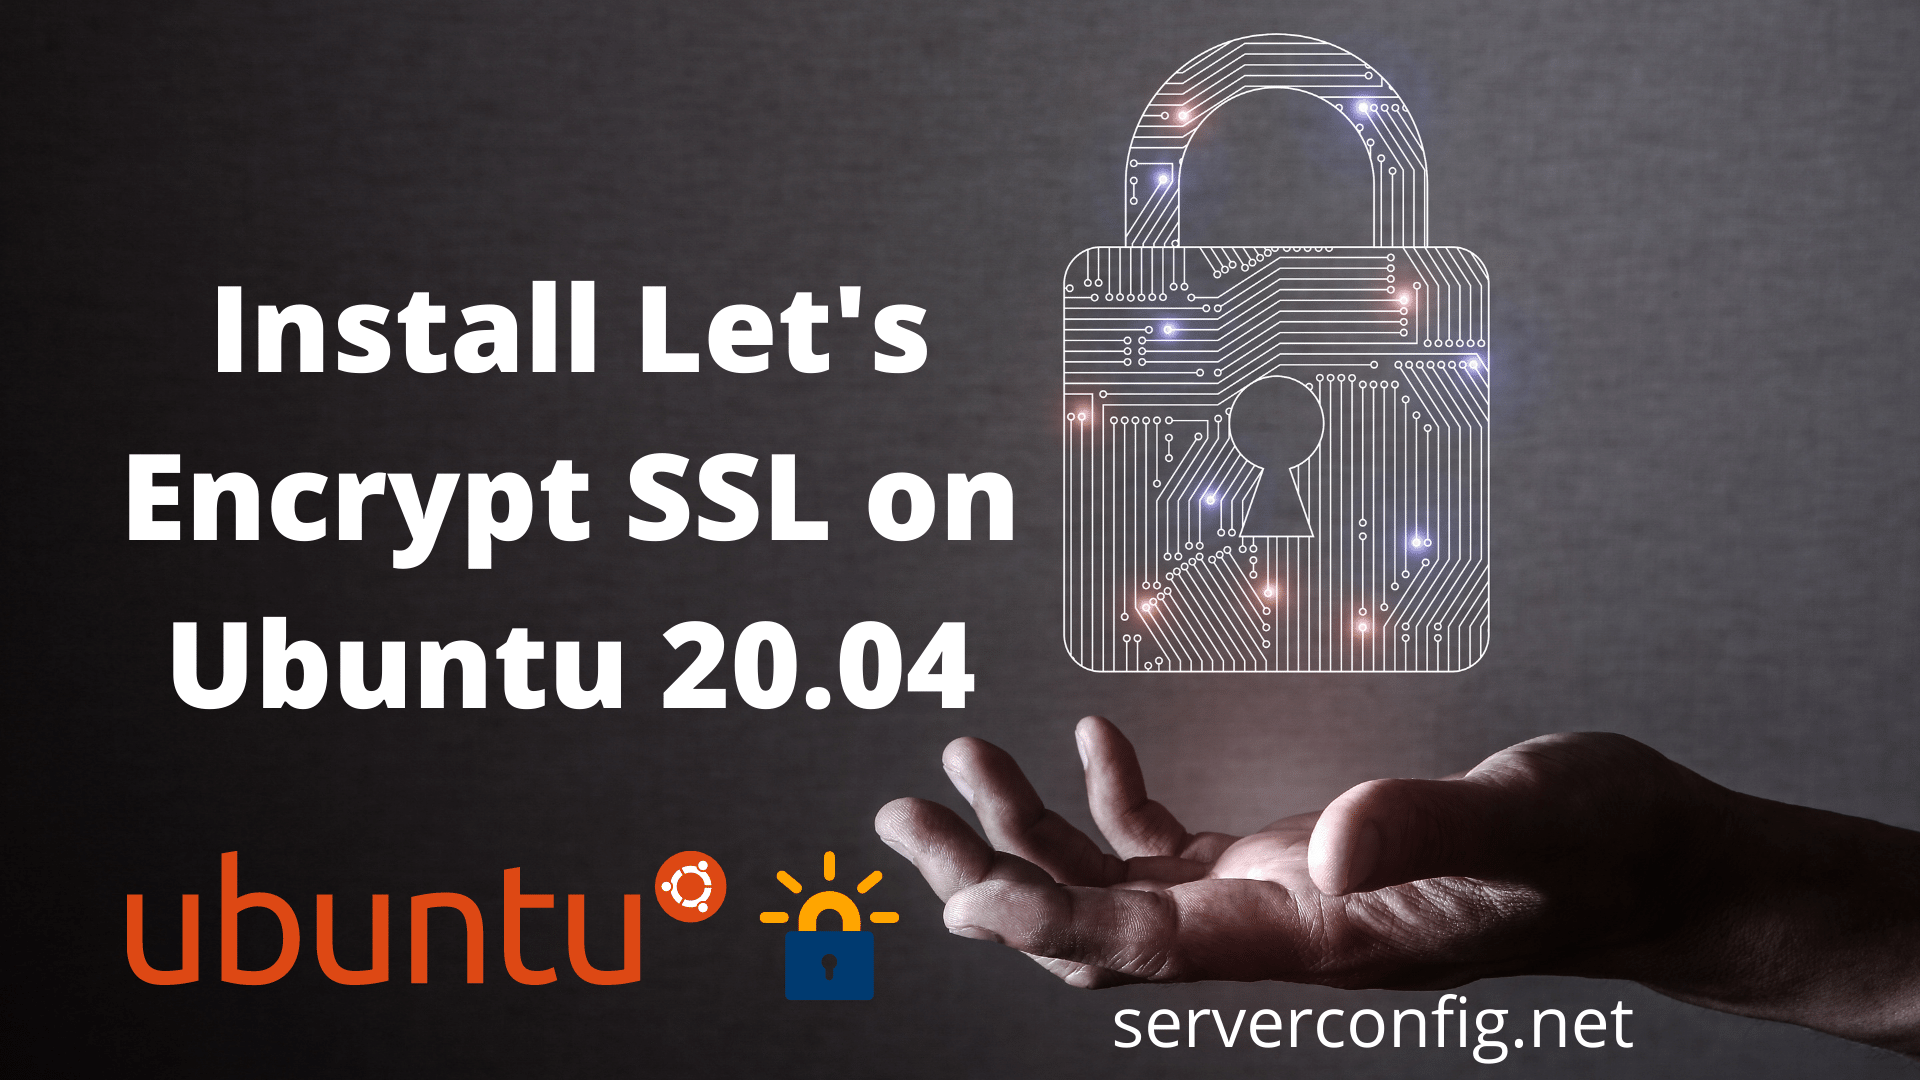 Install Let’s Encrypt SSL on Ubuntu 20.04